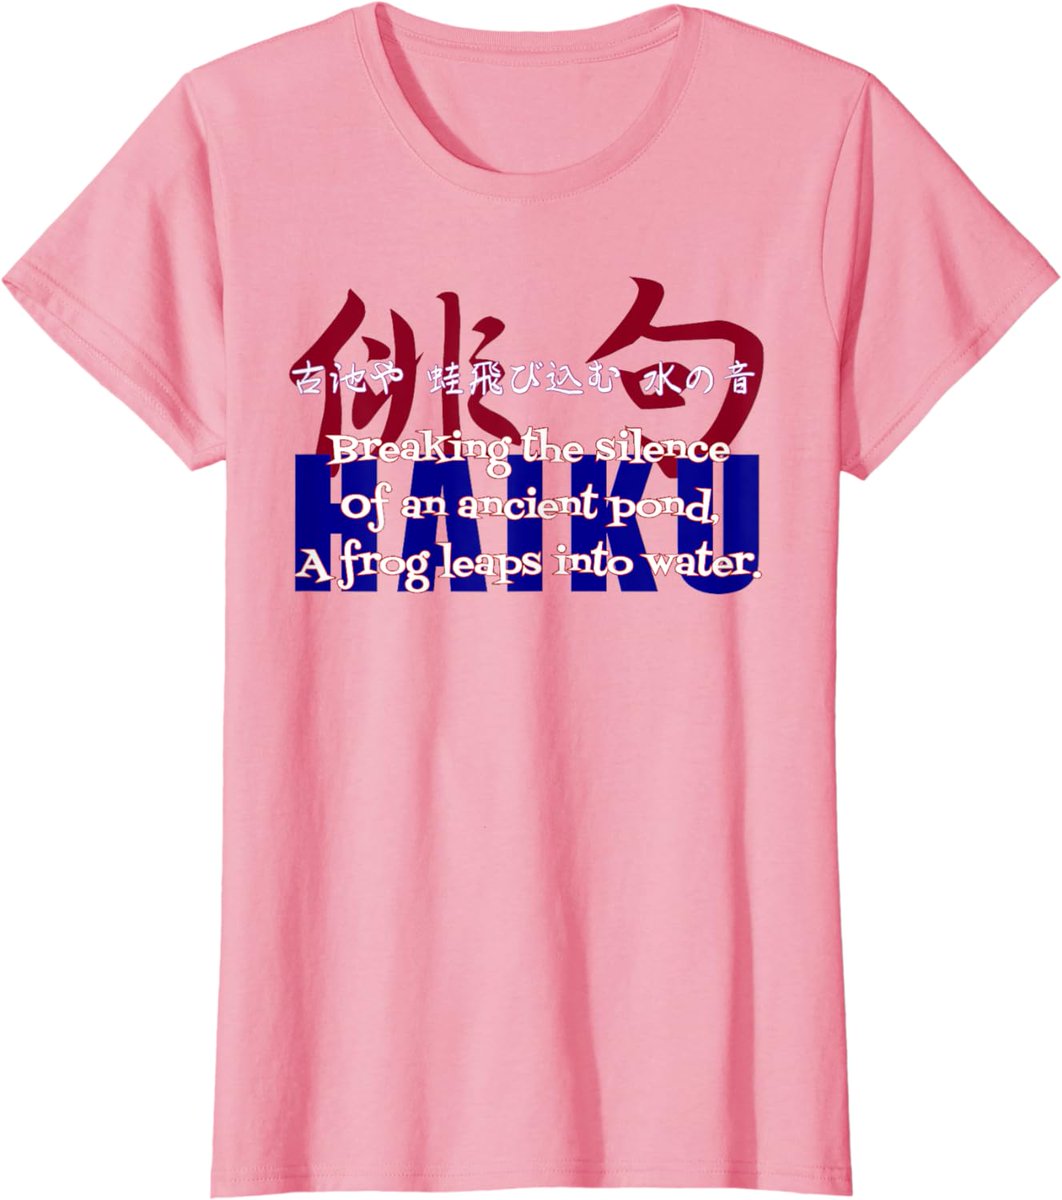 Women Haiku T-Shirt
amazon.com/dp/B0CTG9BFFD?…
#tshirts #tshirtprinting #shirts #fashion #t-shirt #tshirt #poem #poems #lyrics #words #haiku #silence #Japanese #Japan #design #print #printing #originaldesign #originalprint #ladiesfashion #ladiesapparel #womensapparel #womenfashion